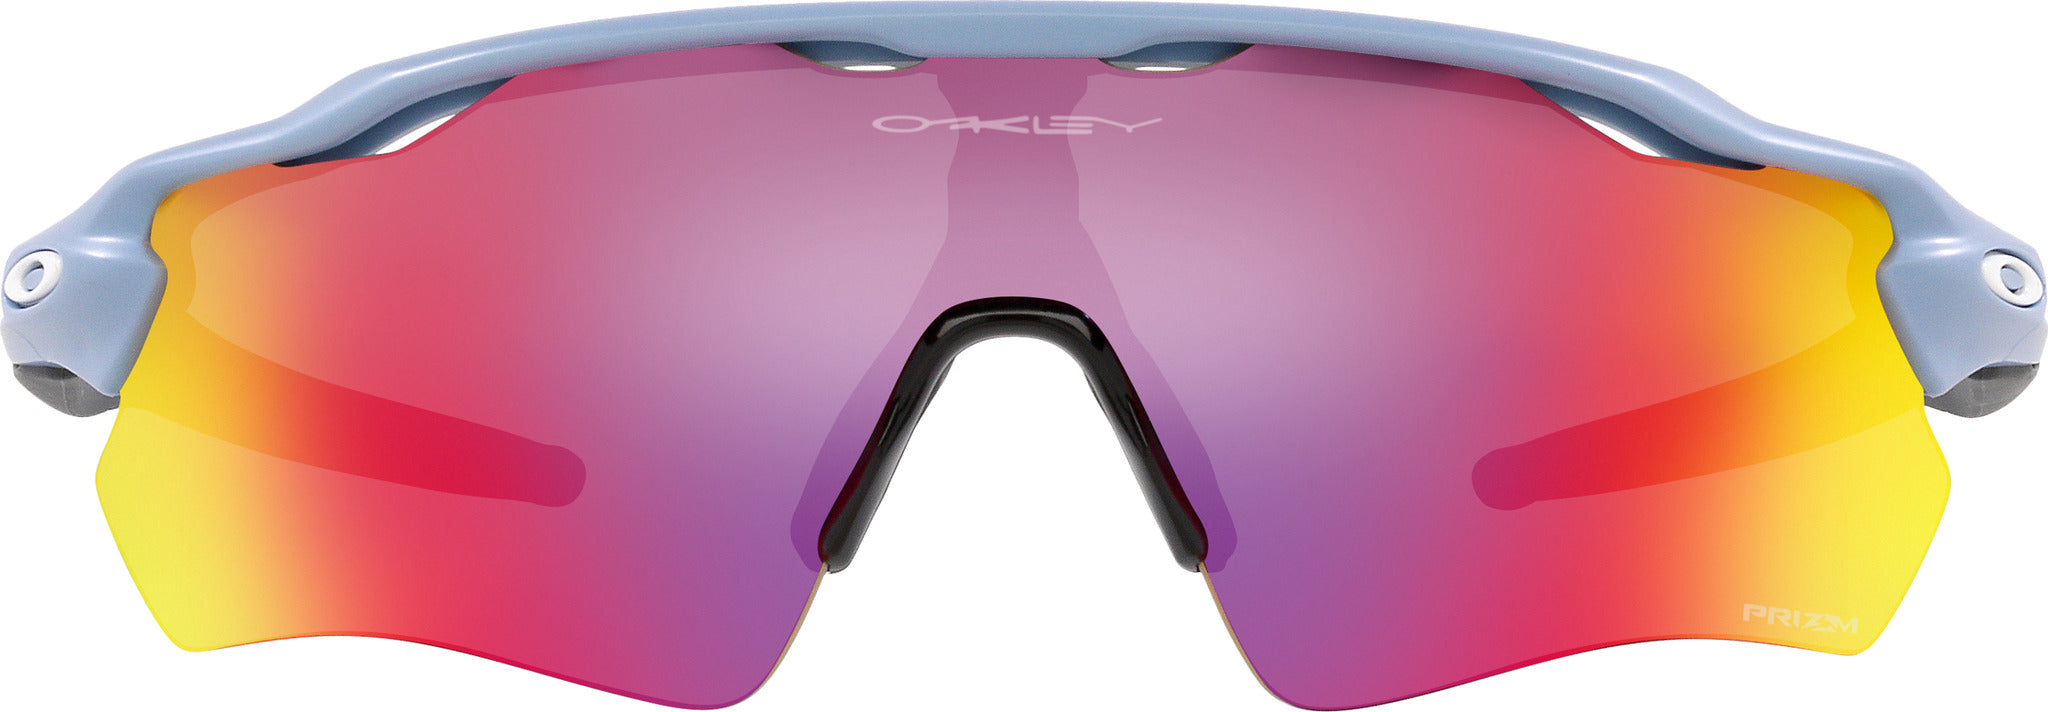 Oakley Radar EV Path Sunglasses - Matte Stonewash - Prizm Road 